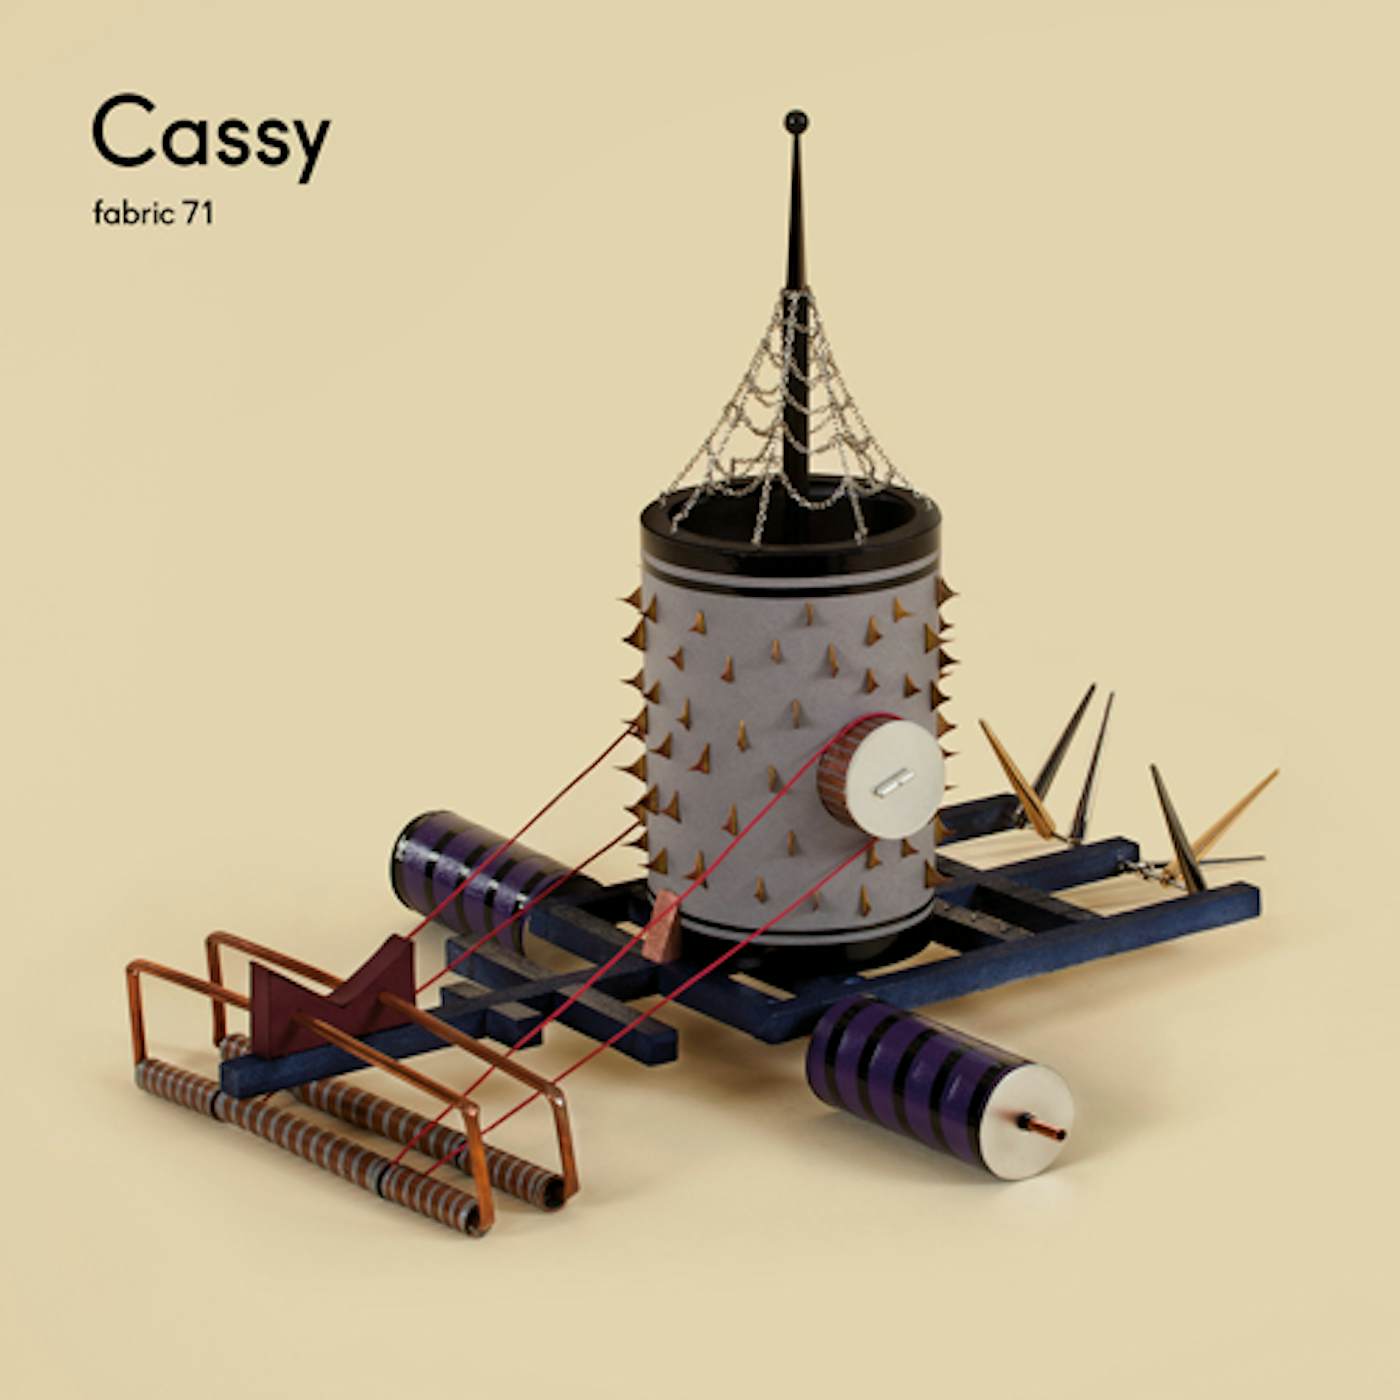 FABRIC 71: CASSY CD